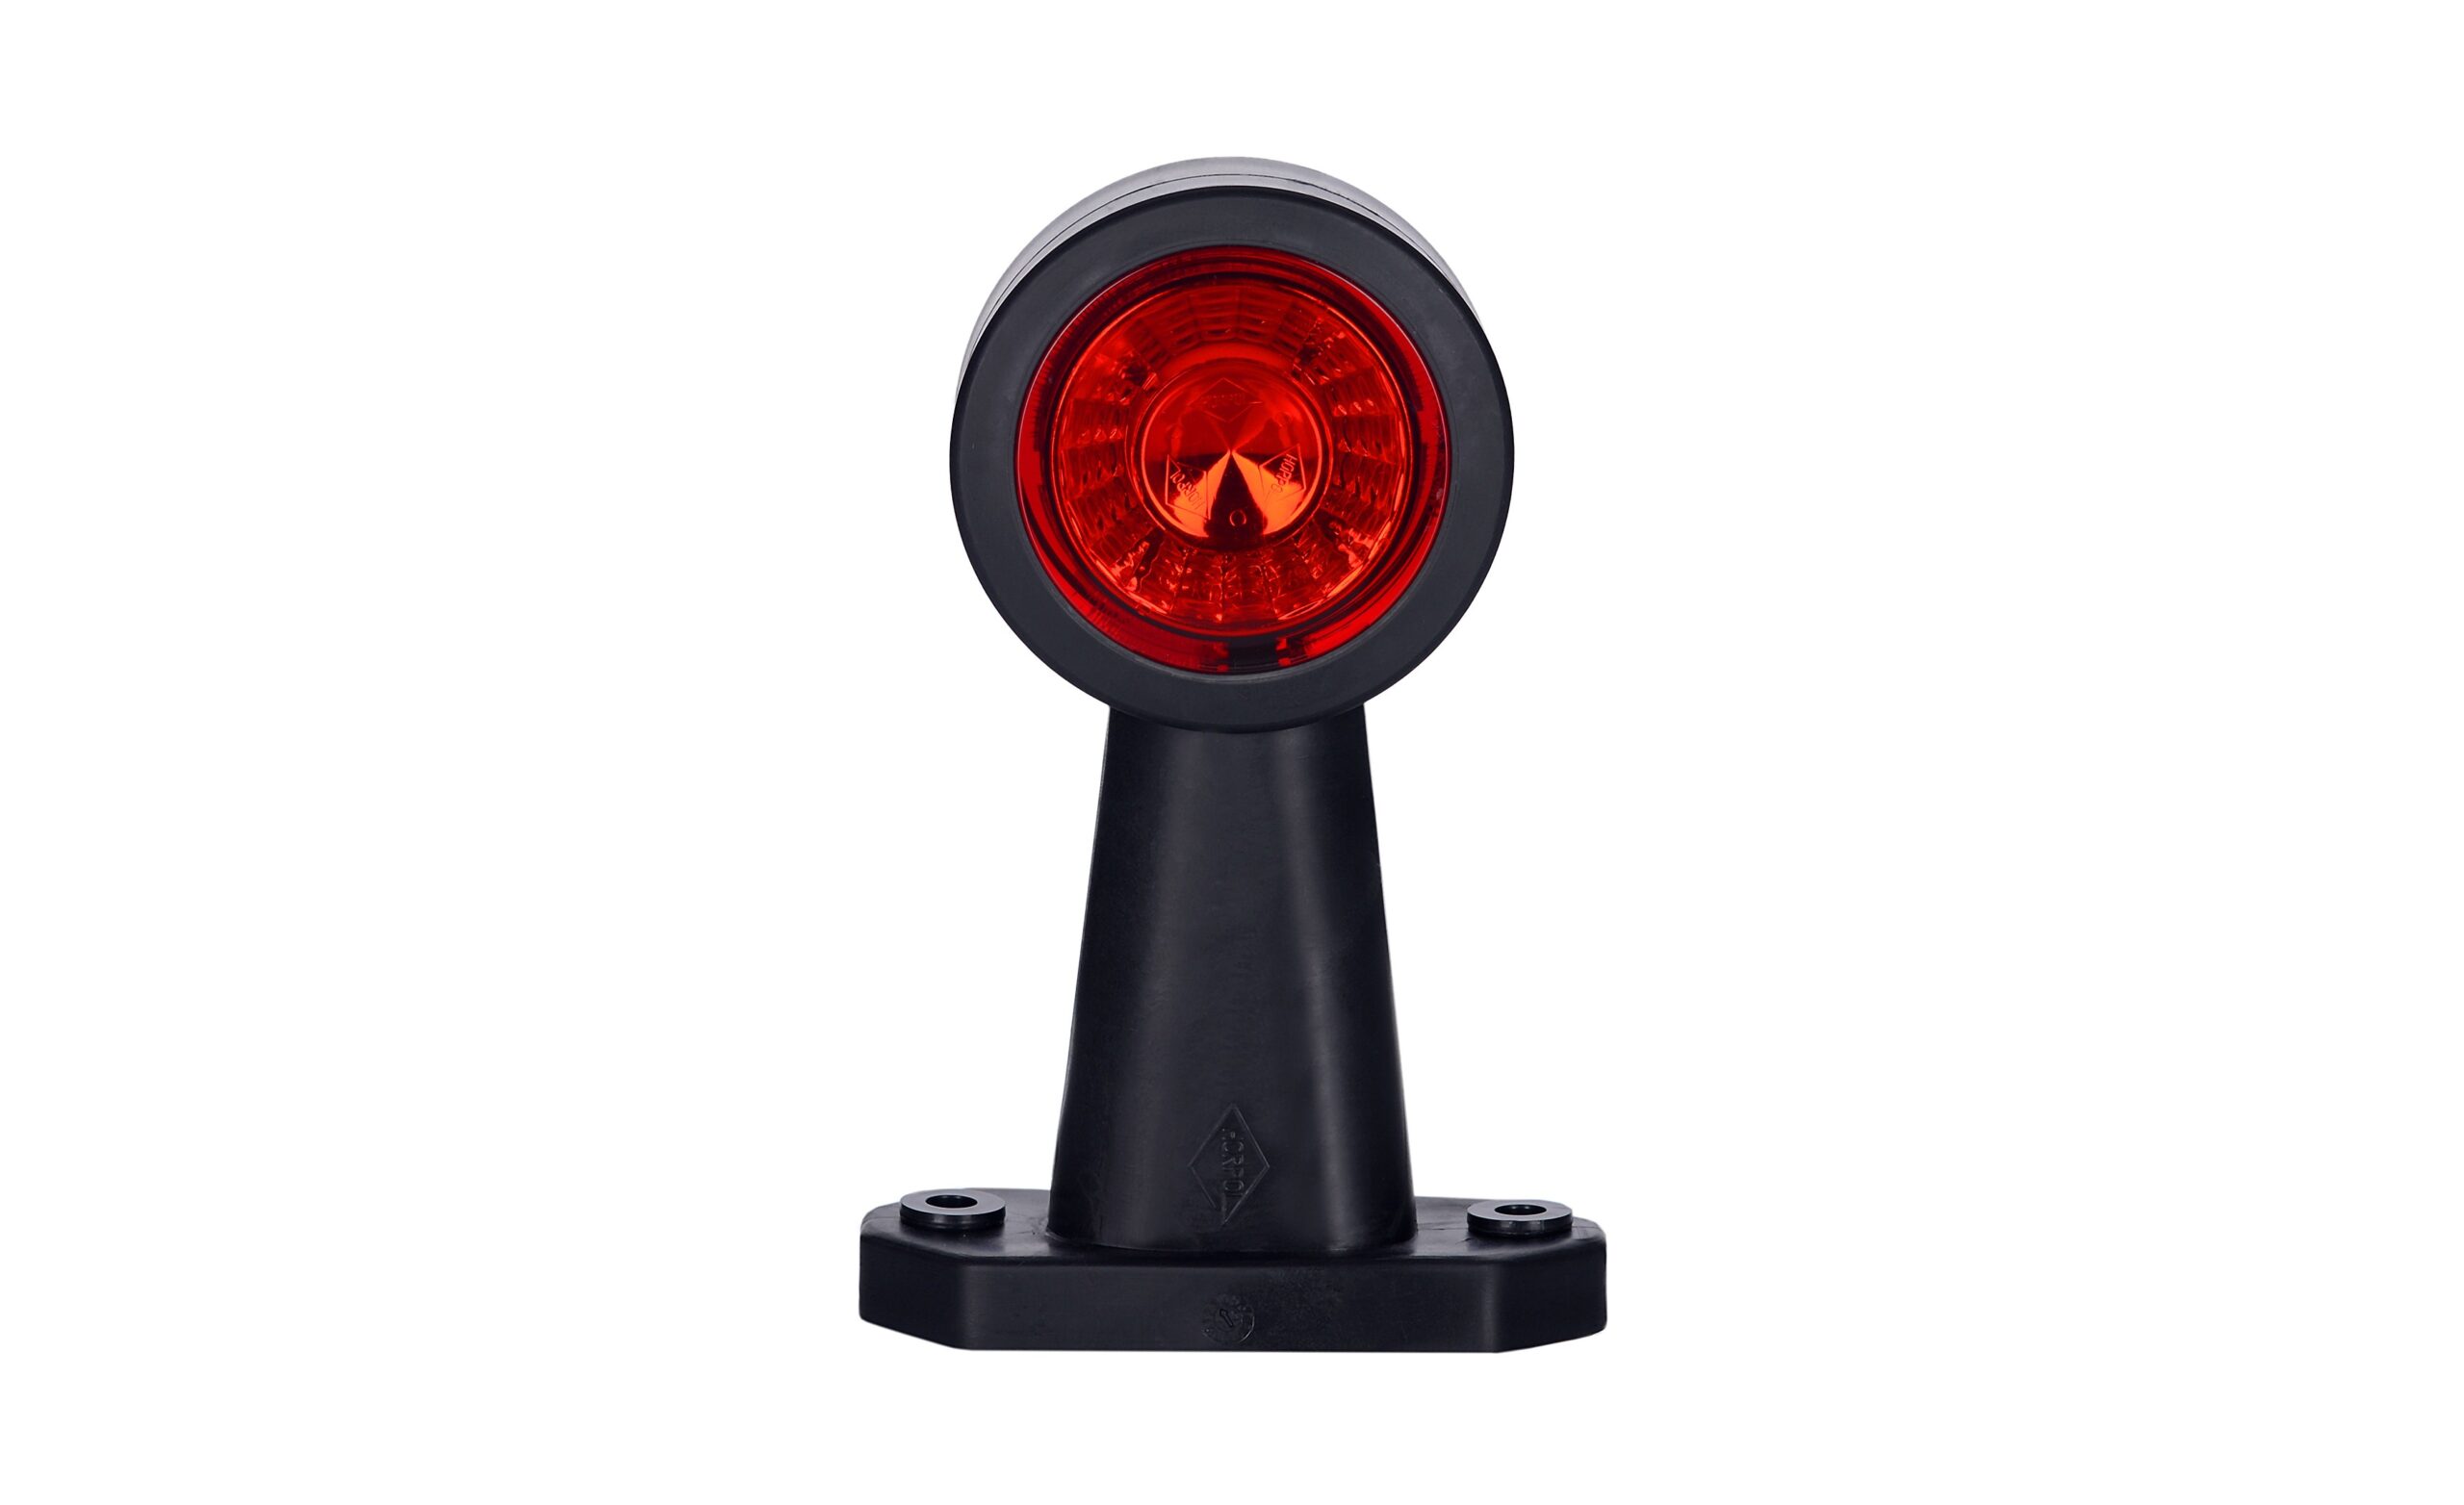 Lămpi de poziție și marcaj - Lampă gabarit rotundă Horpol cu braț drept, marcaj dreapta, LED alb/roșu, alimentare 12/24V, fomcoshop.ro